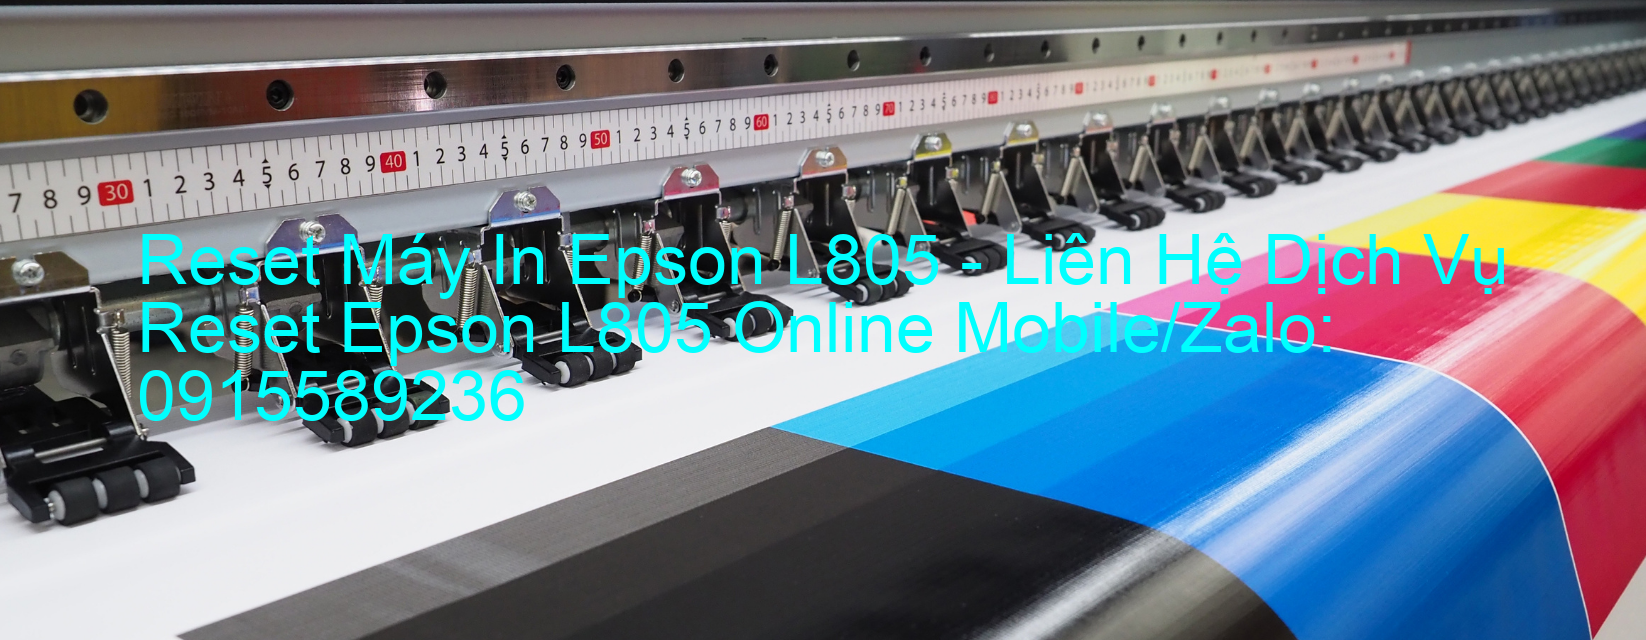 Reset Máy In Epson L805 Online